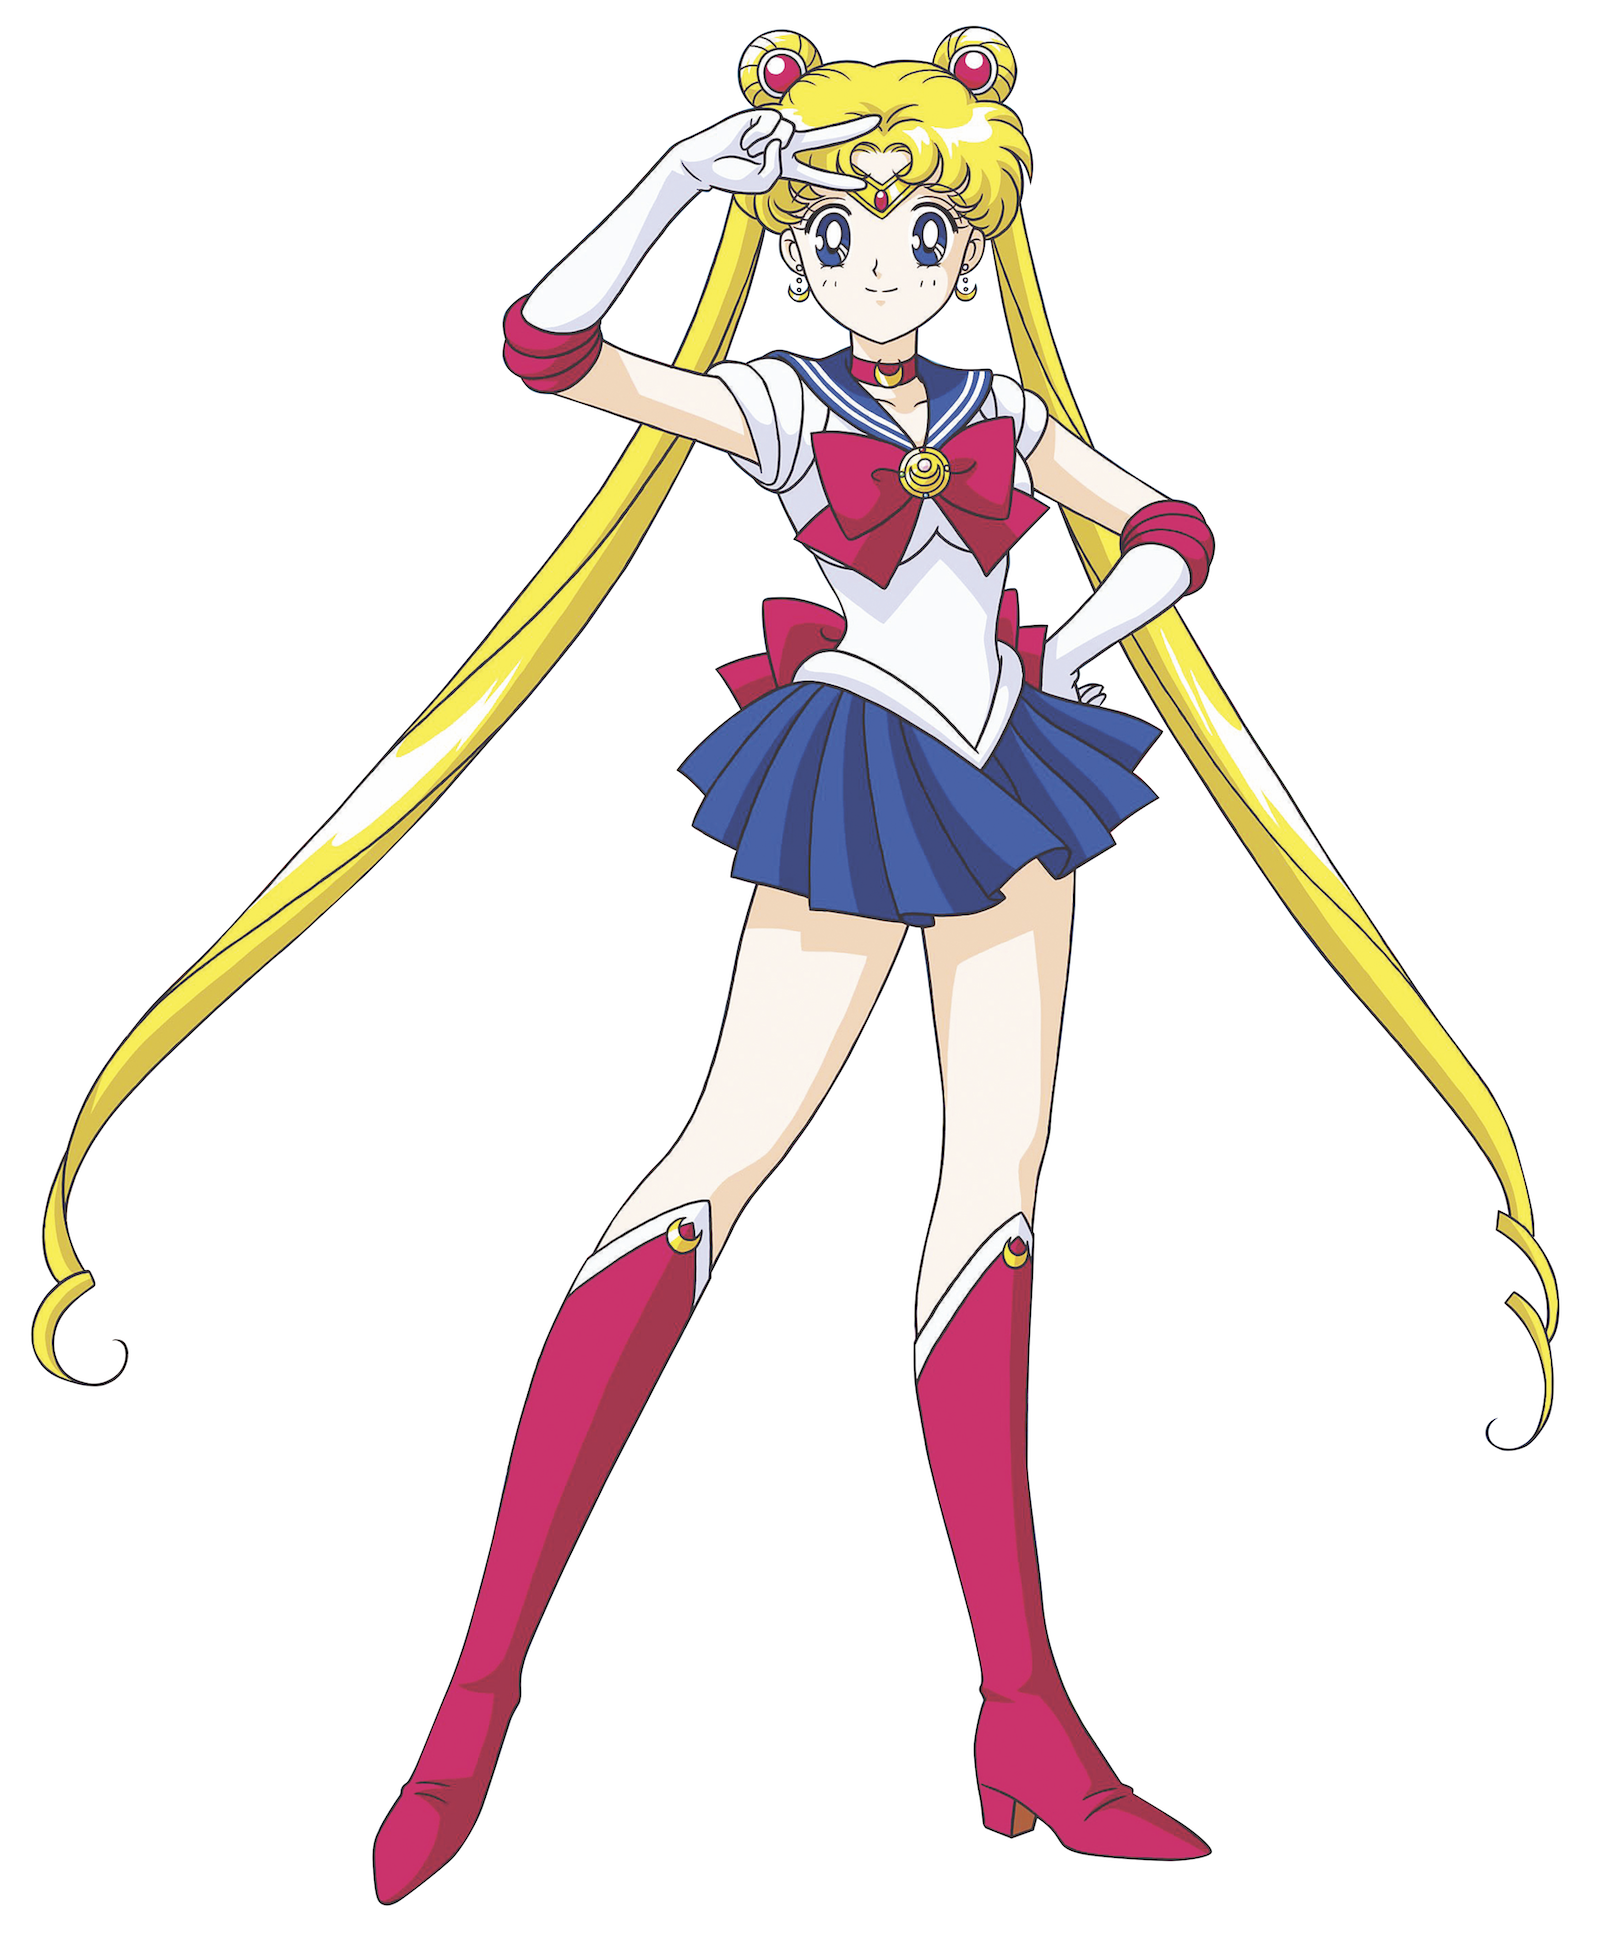 Sail on, Sailor: Sailor Moon turns 25 | The Spokesman-Review